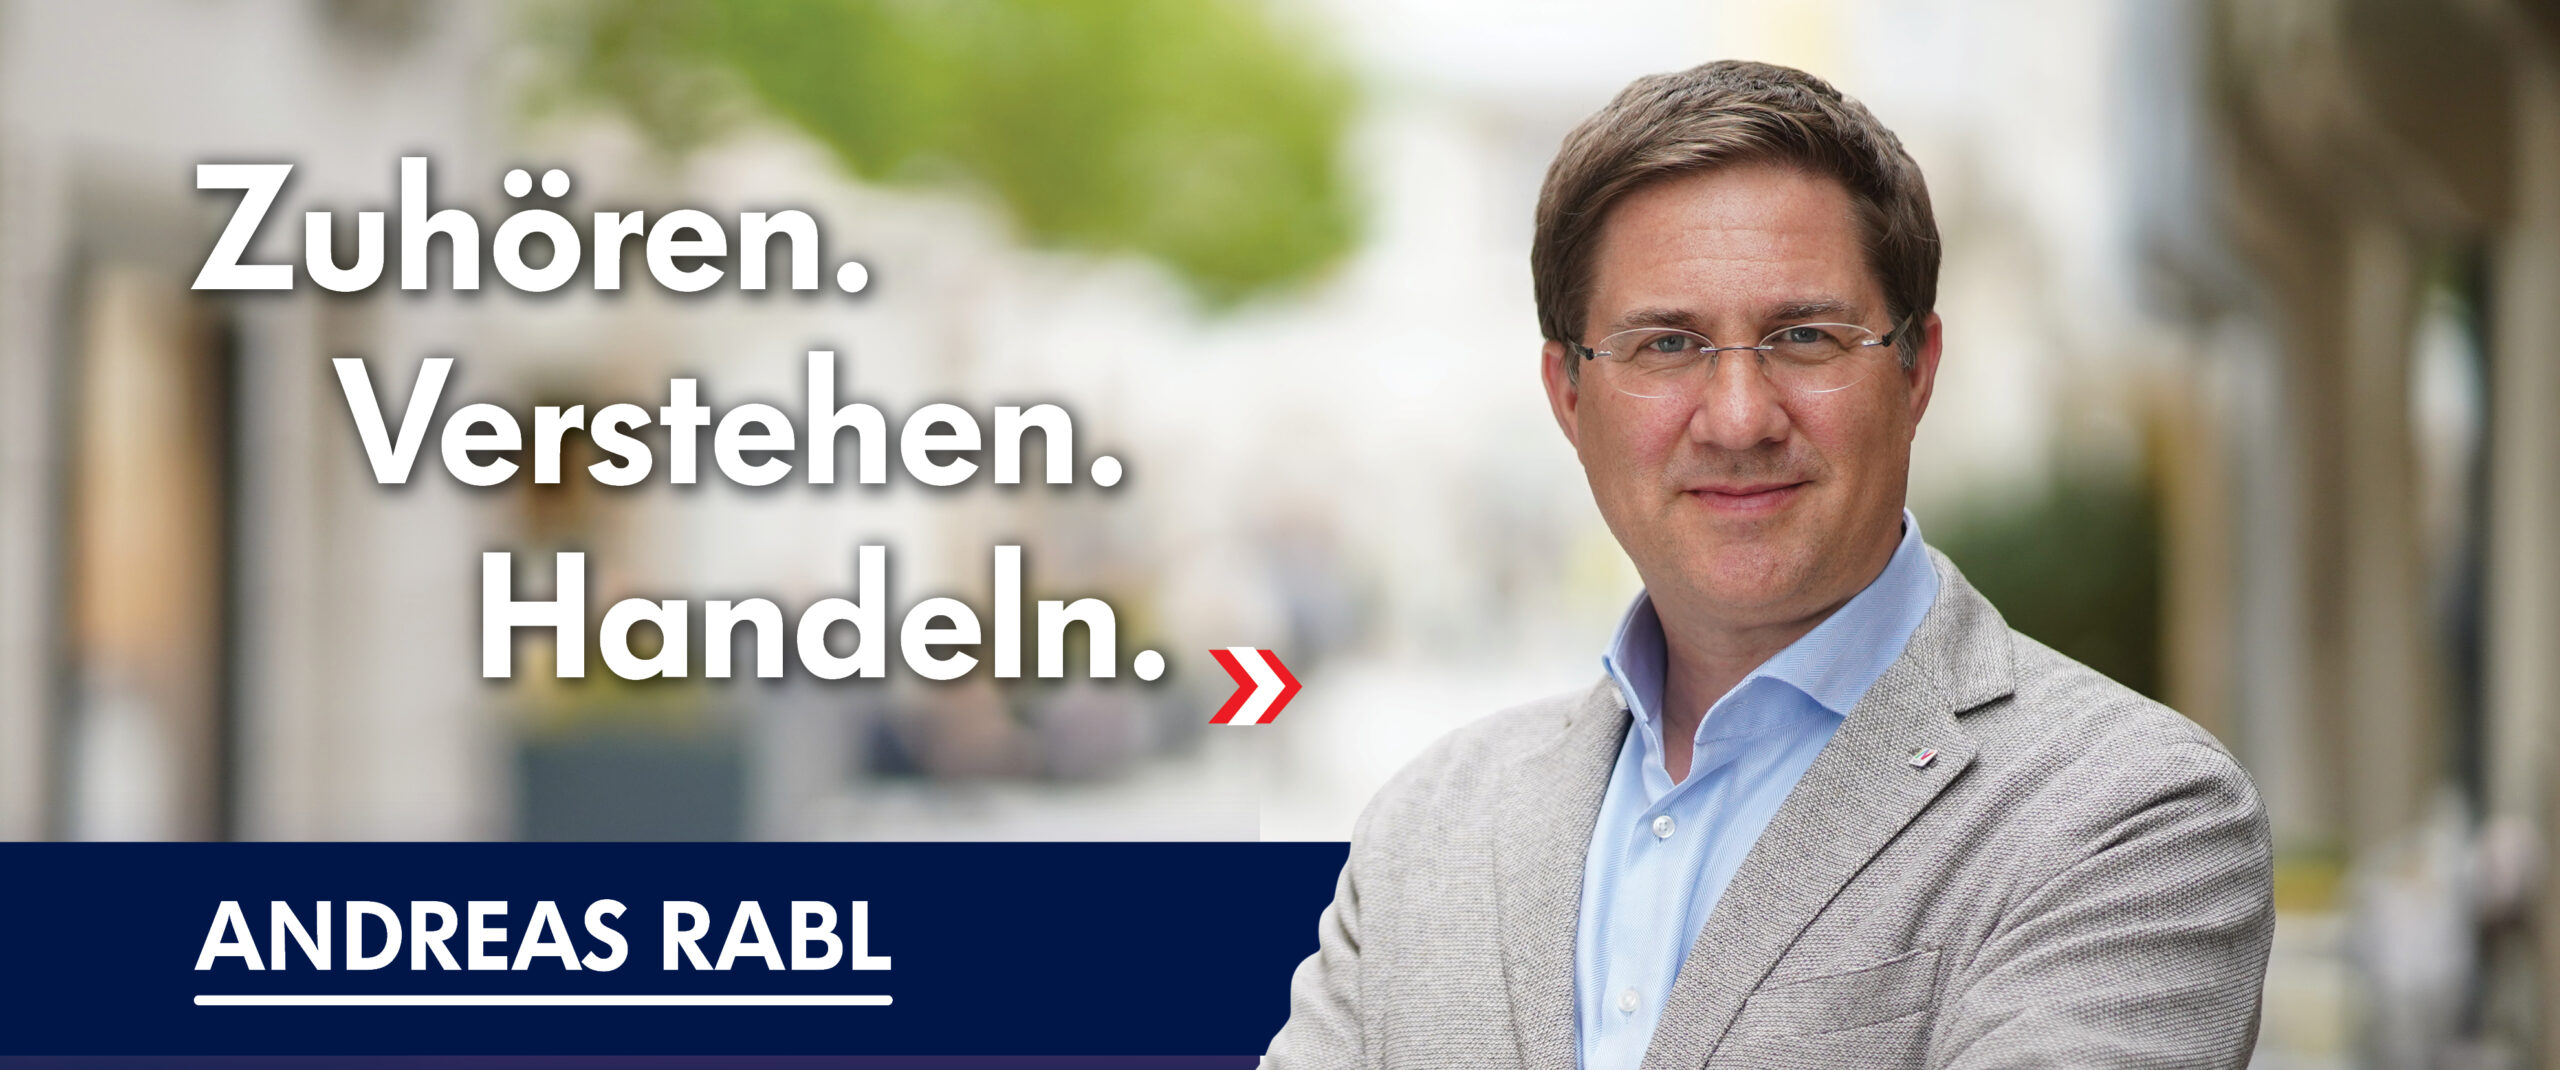 Header Andreas Rabl Zuhören Verstehen Handeln